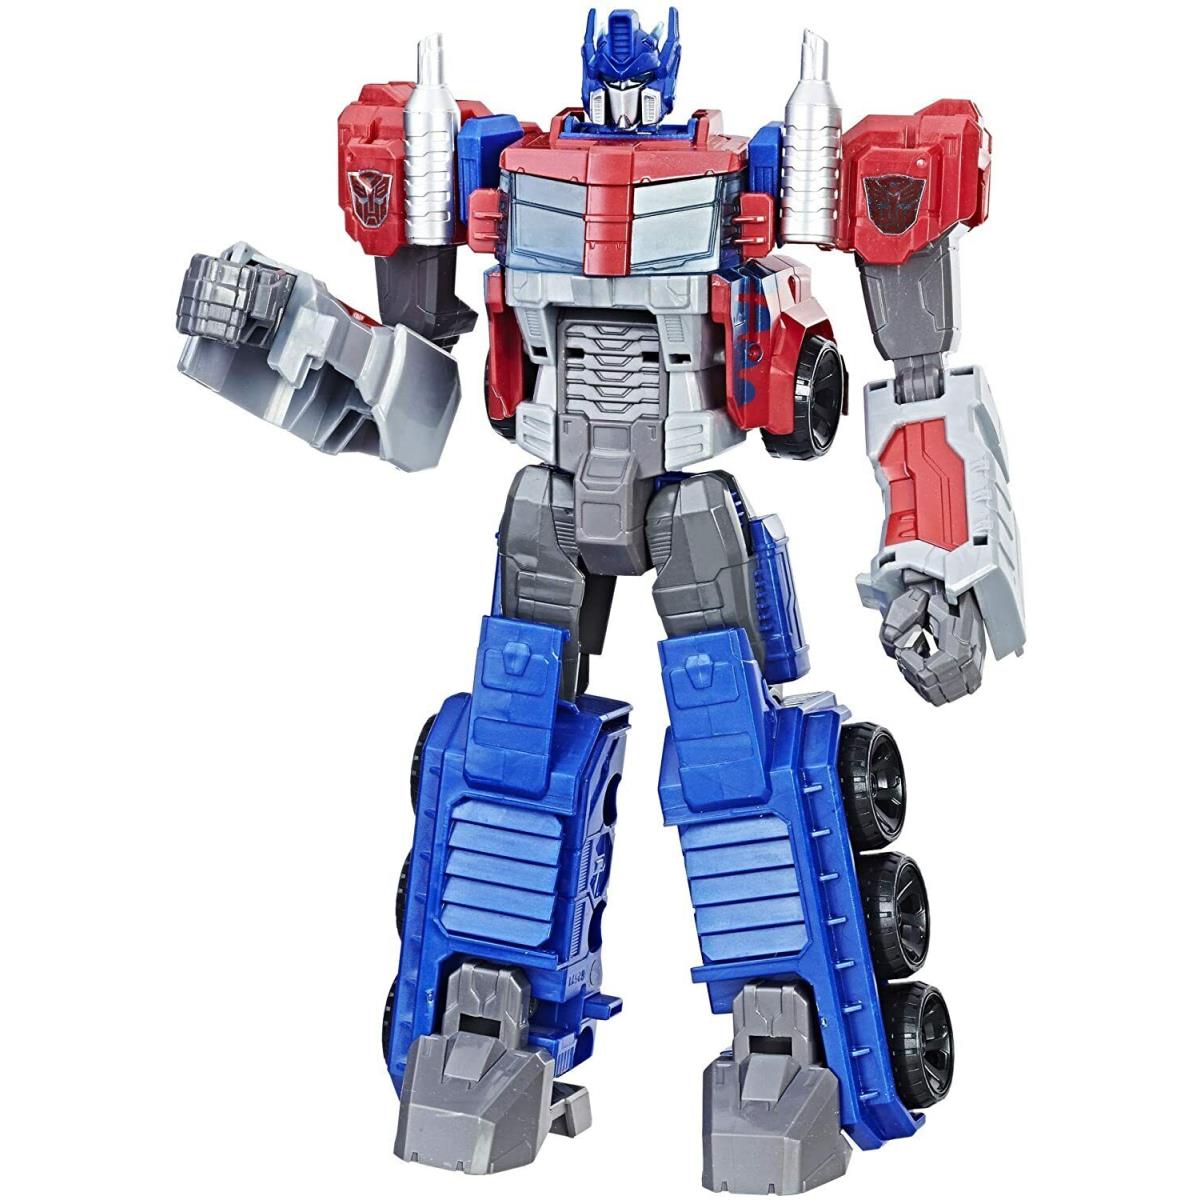 Transformers Optimus Prime Action Figure - Large Figure